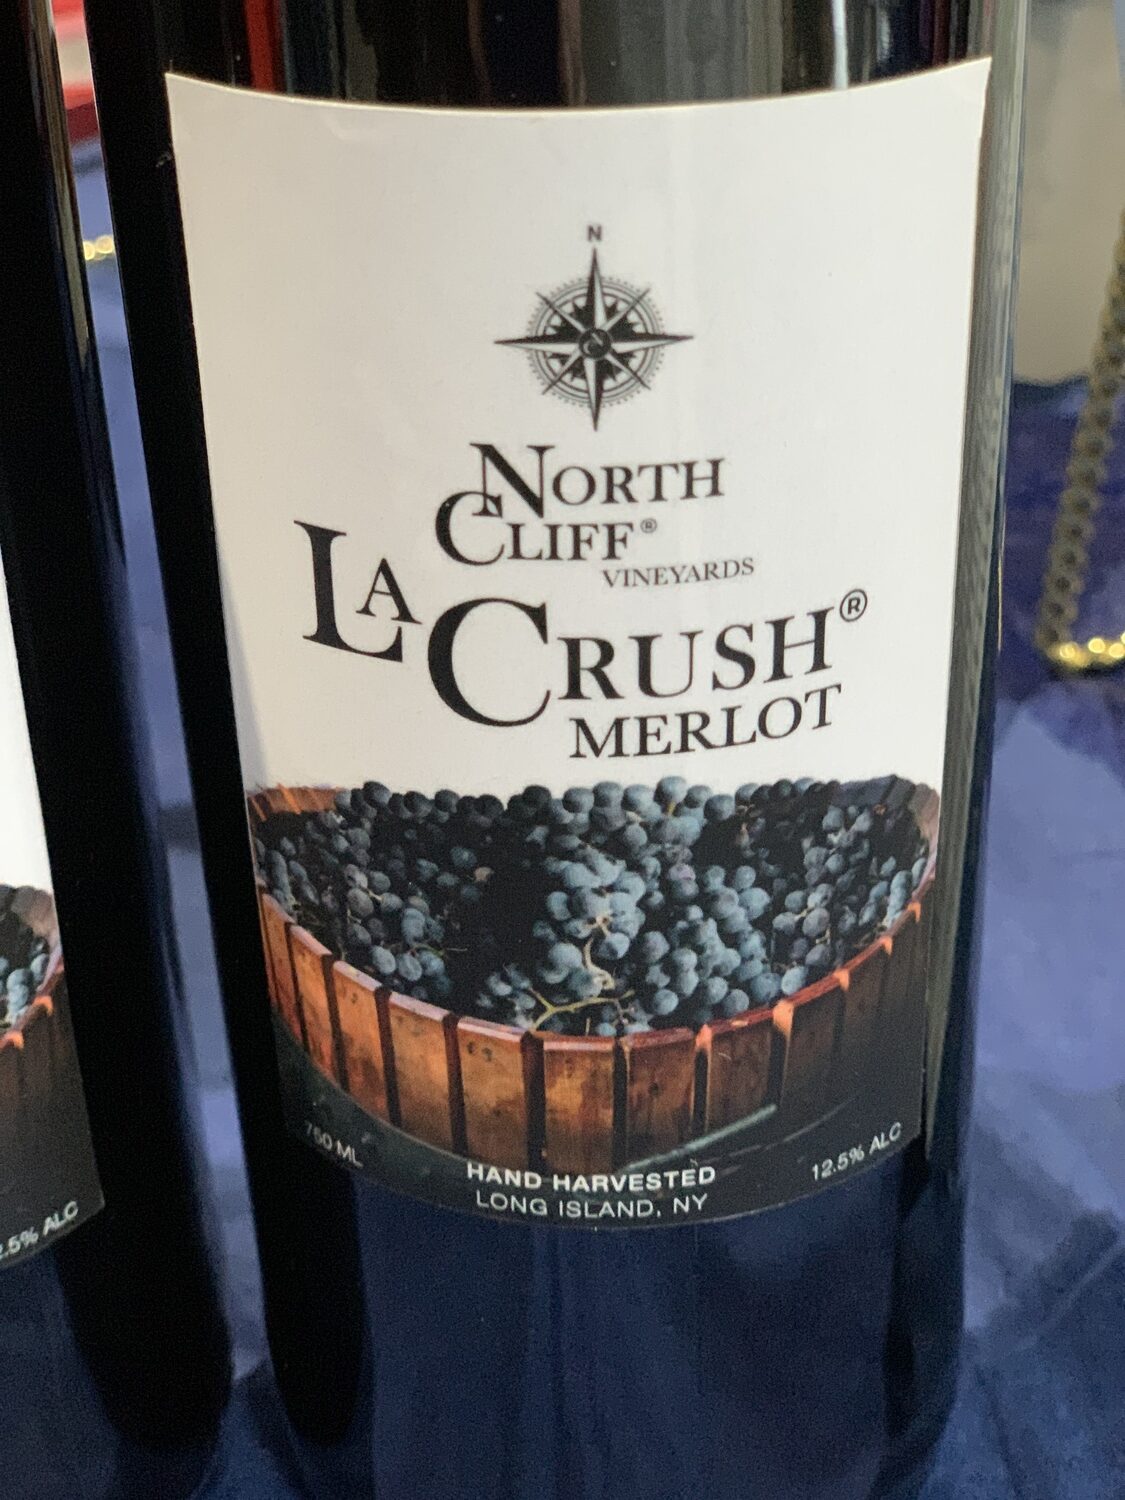 North Cliff Vineyards' La Crush Merlot. S. DERMONT